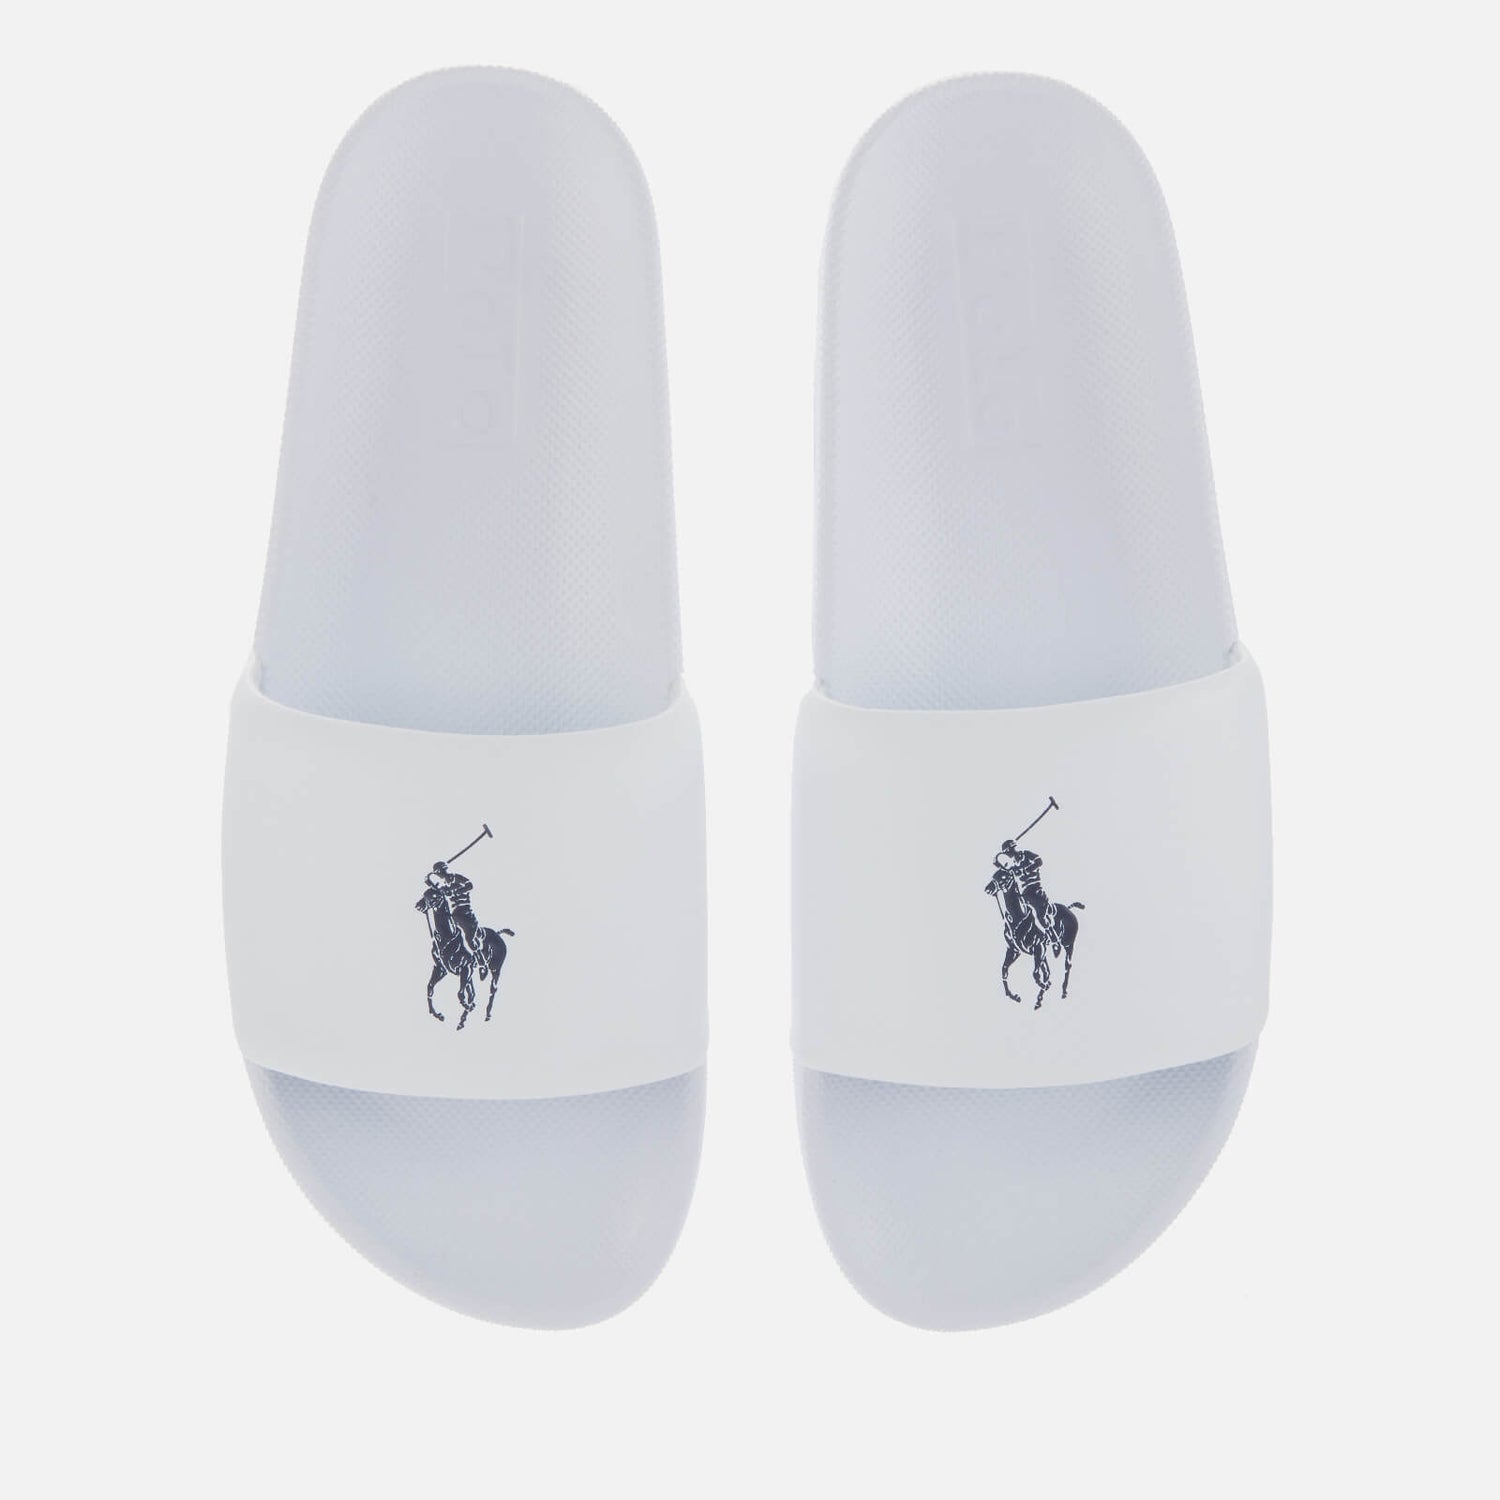 Polo Ralph Lauren Men's Cayson Slide Sandals - White/Navy